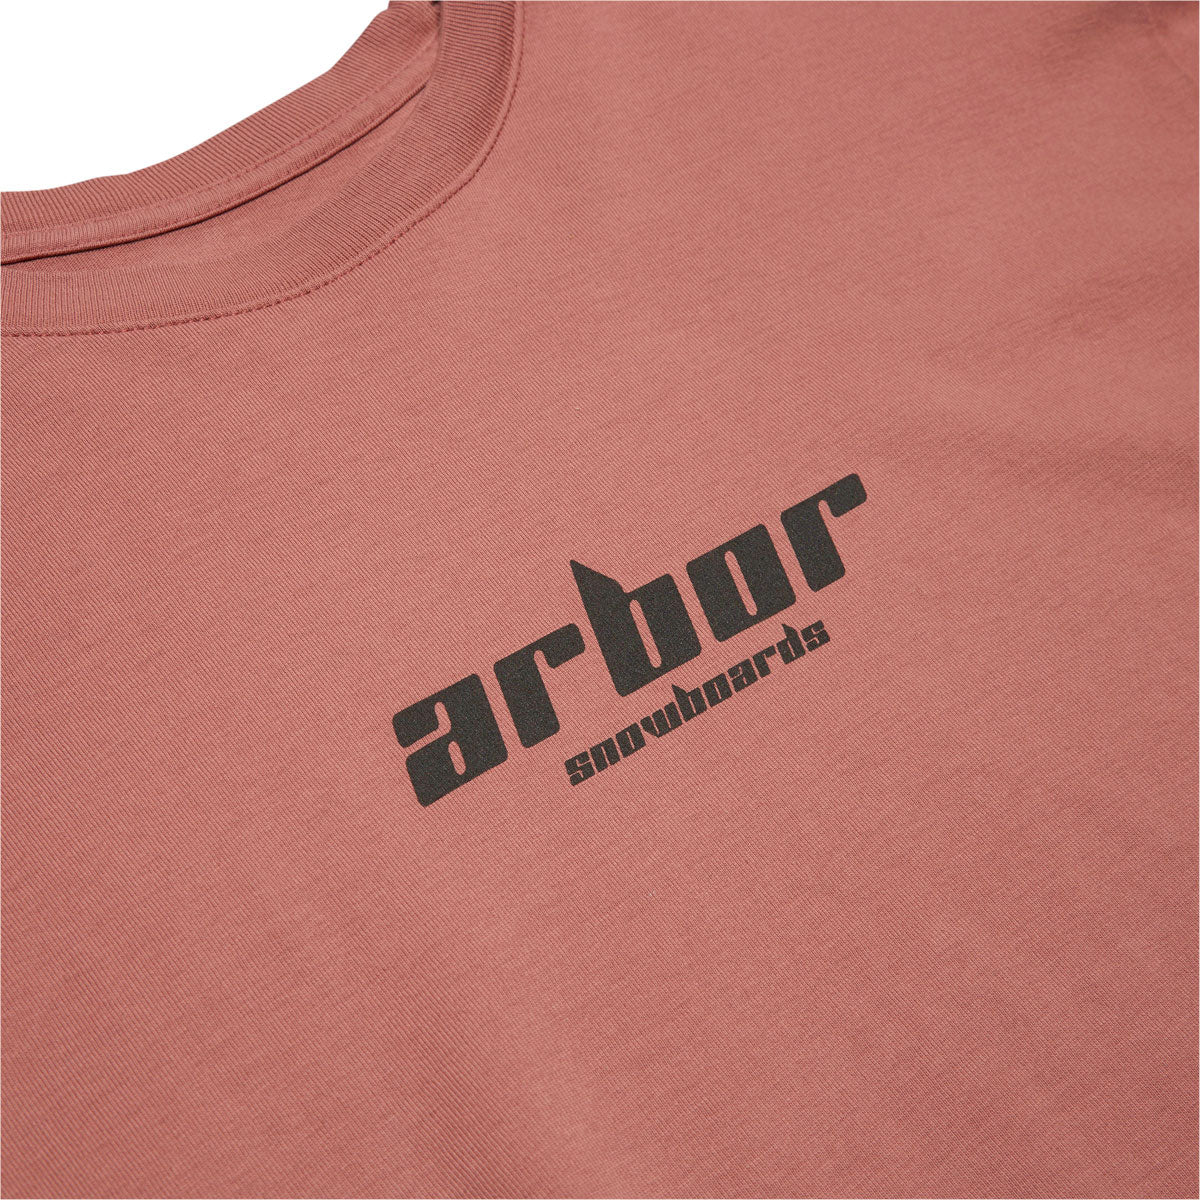 Arbor Draft T-Shirt - Plum image 2